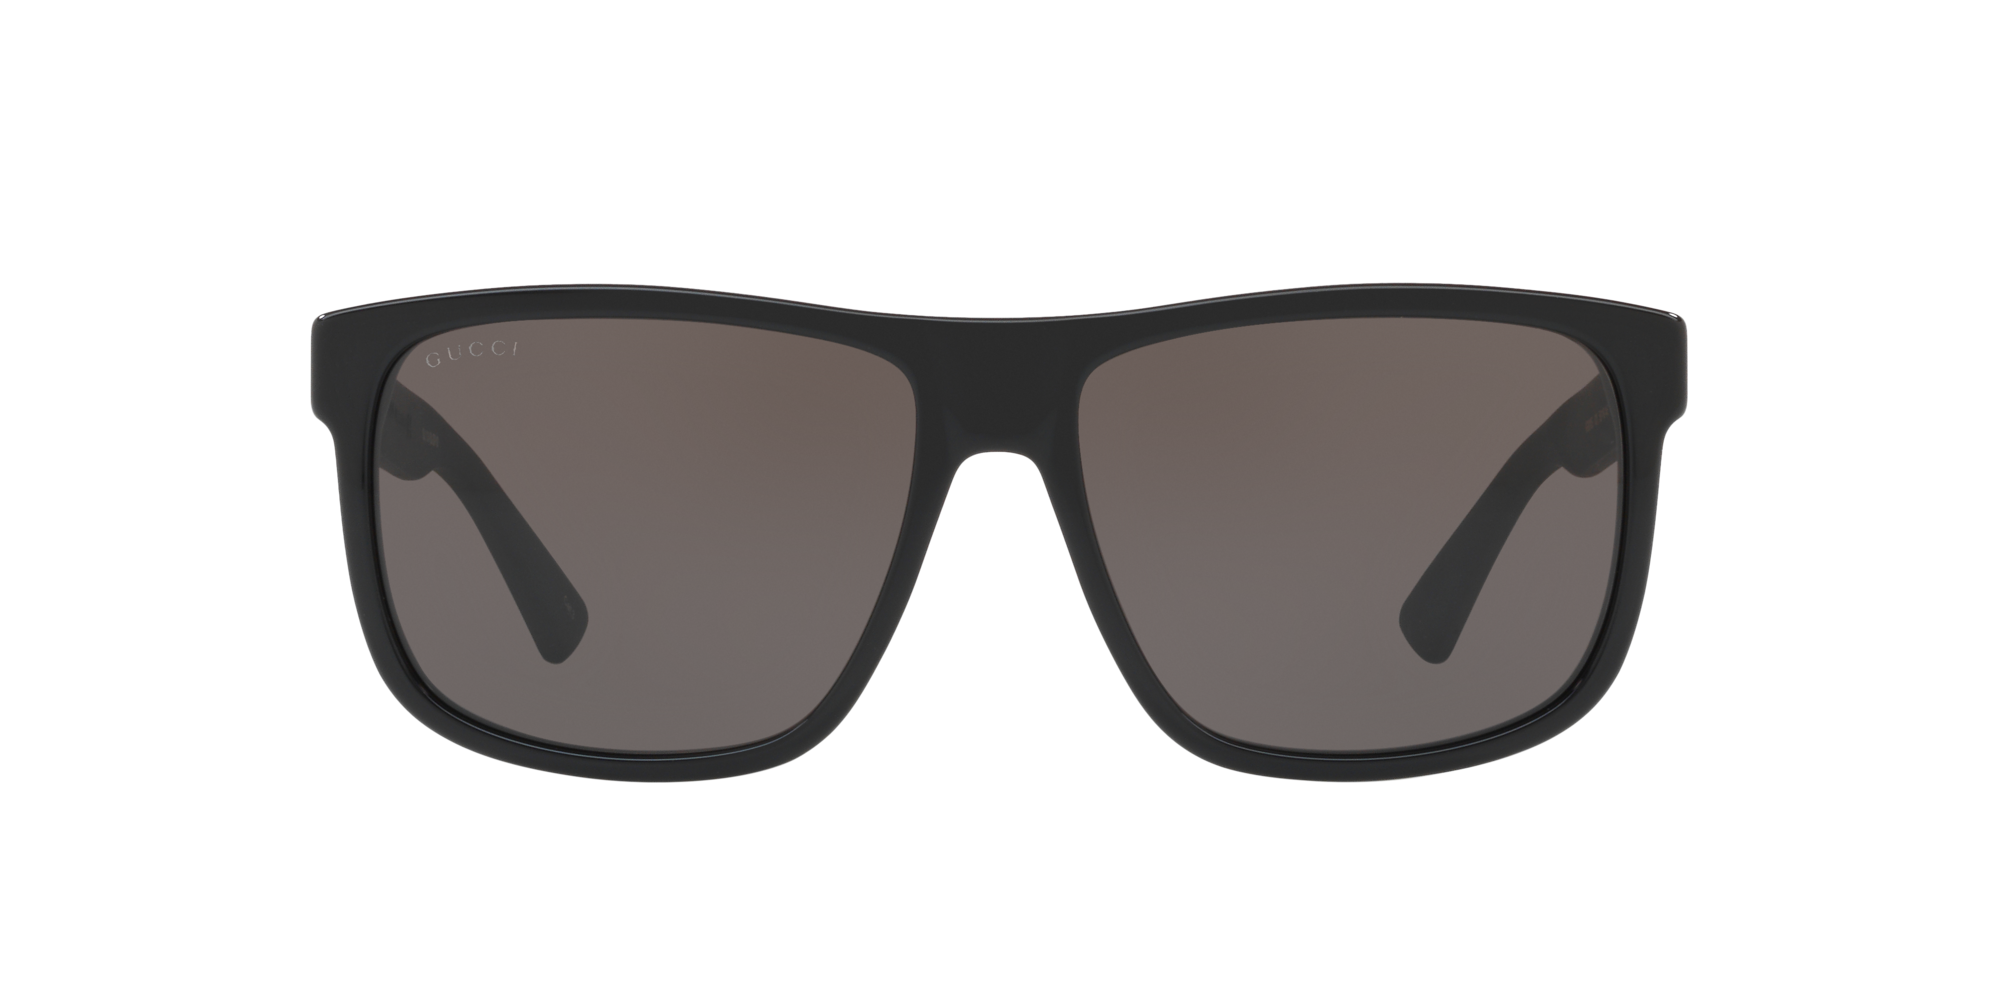 gucci gg 0010 wayfarer sunglasses